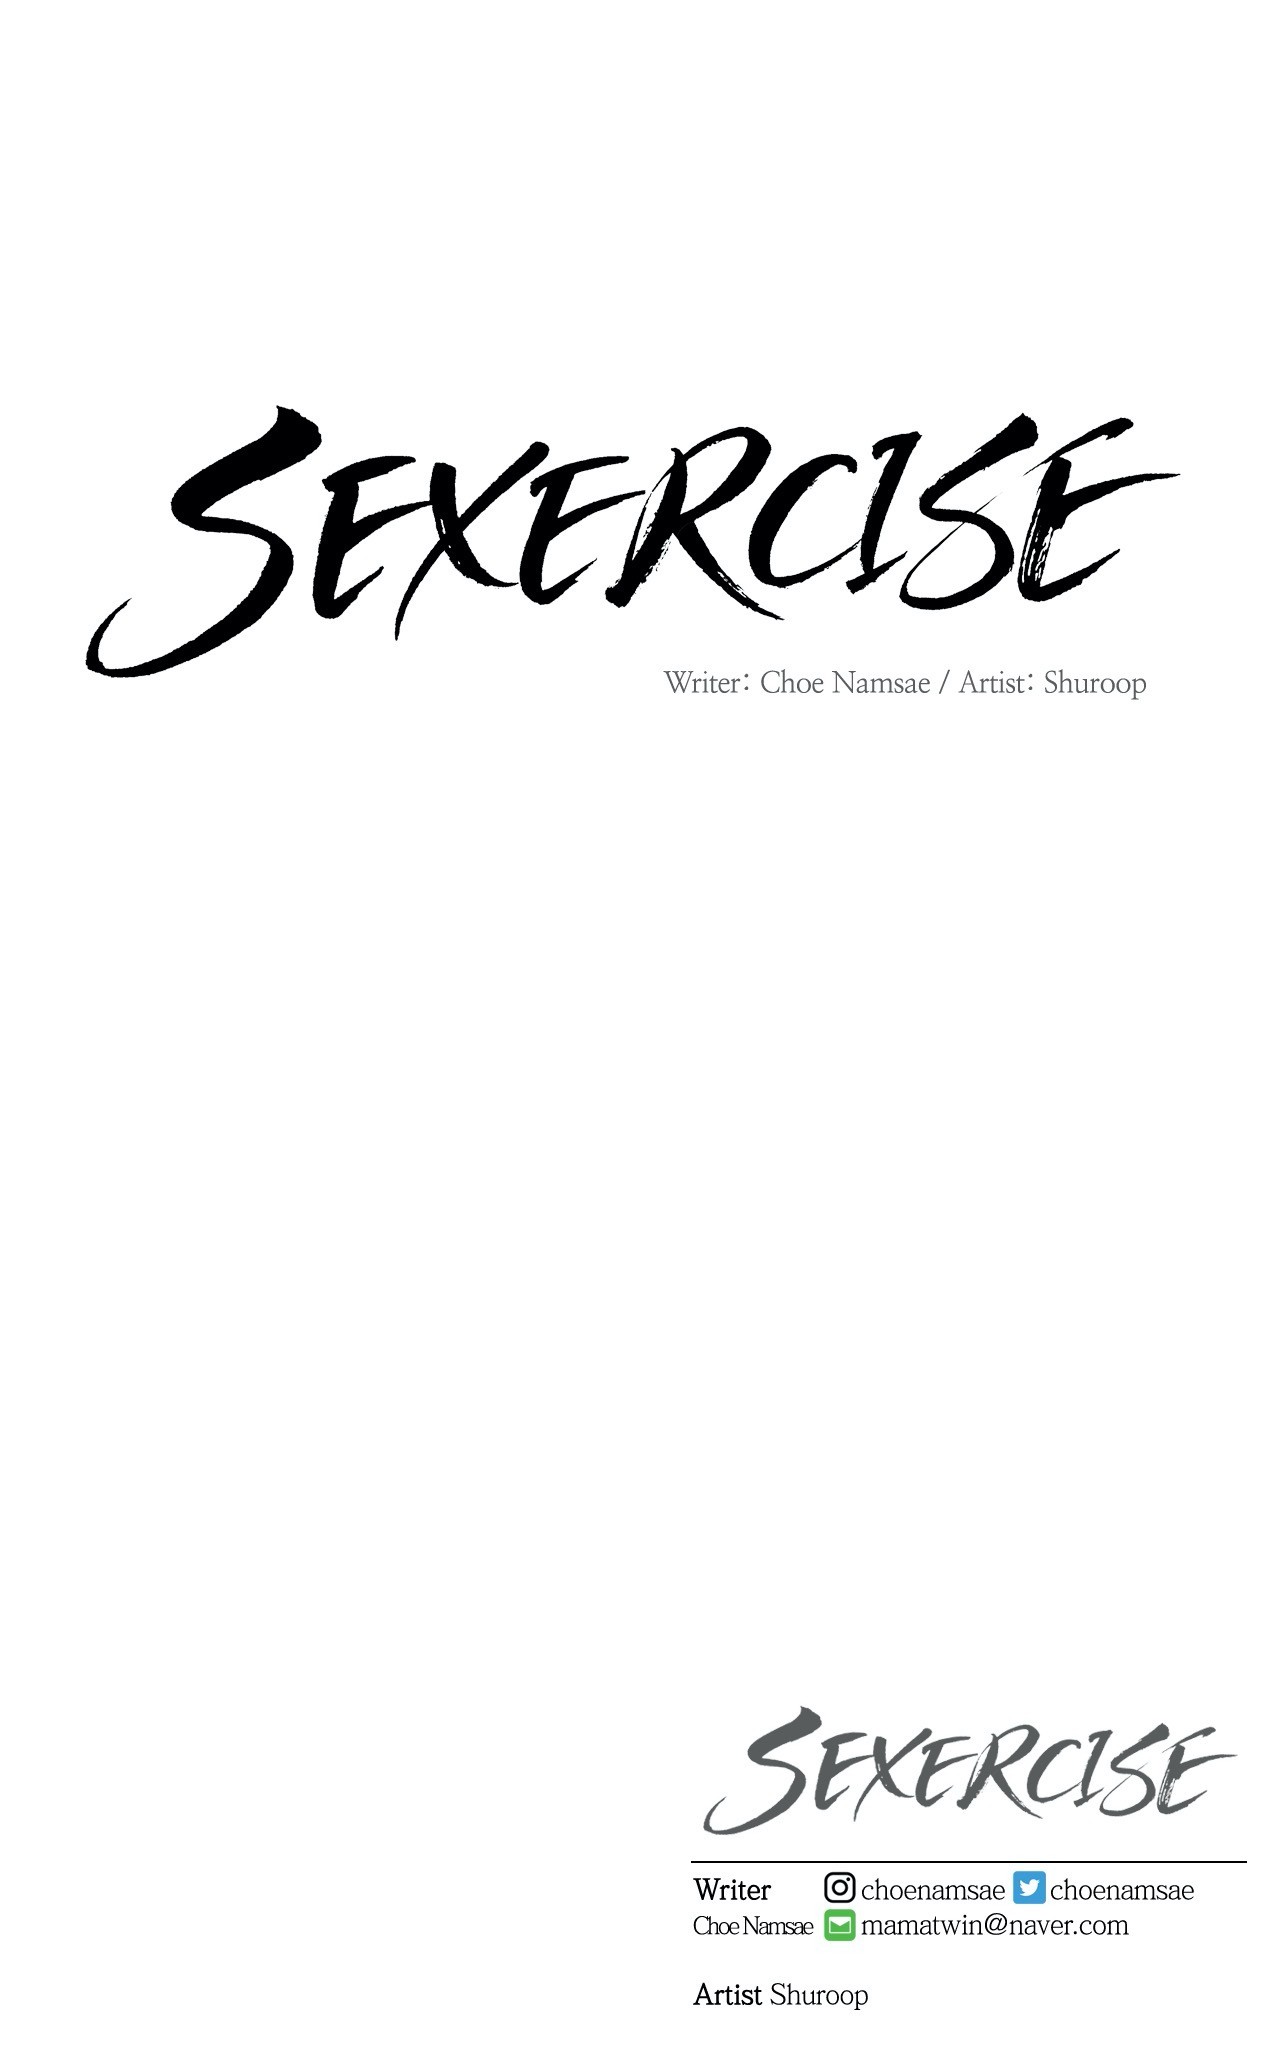 Sexercise image